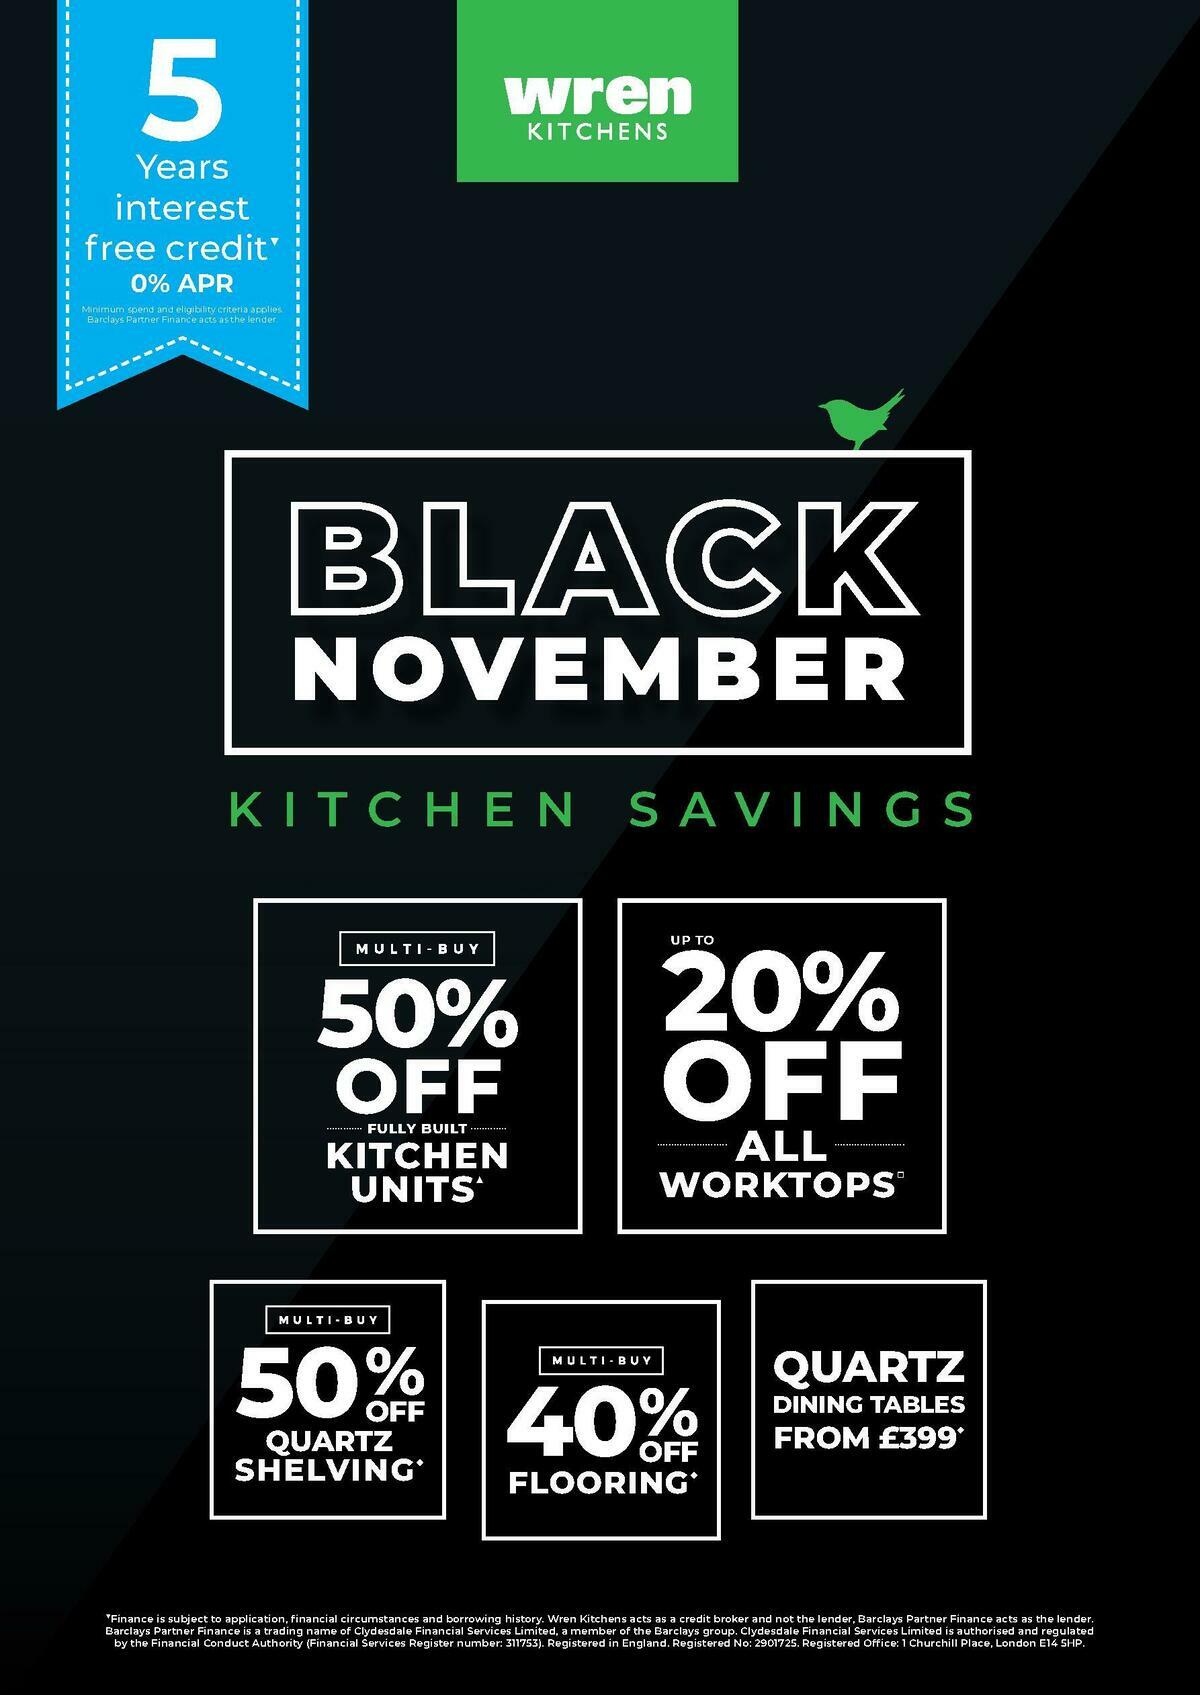 Wren Kitchens Black November Kitchen Savings Gazette Offers from 12 November